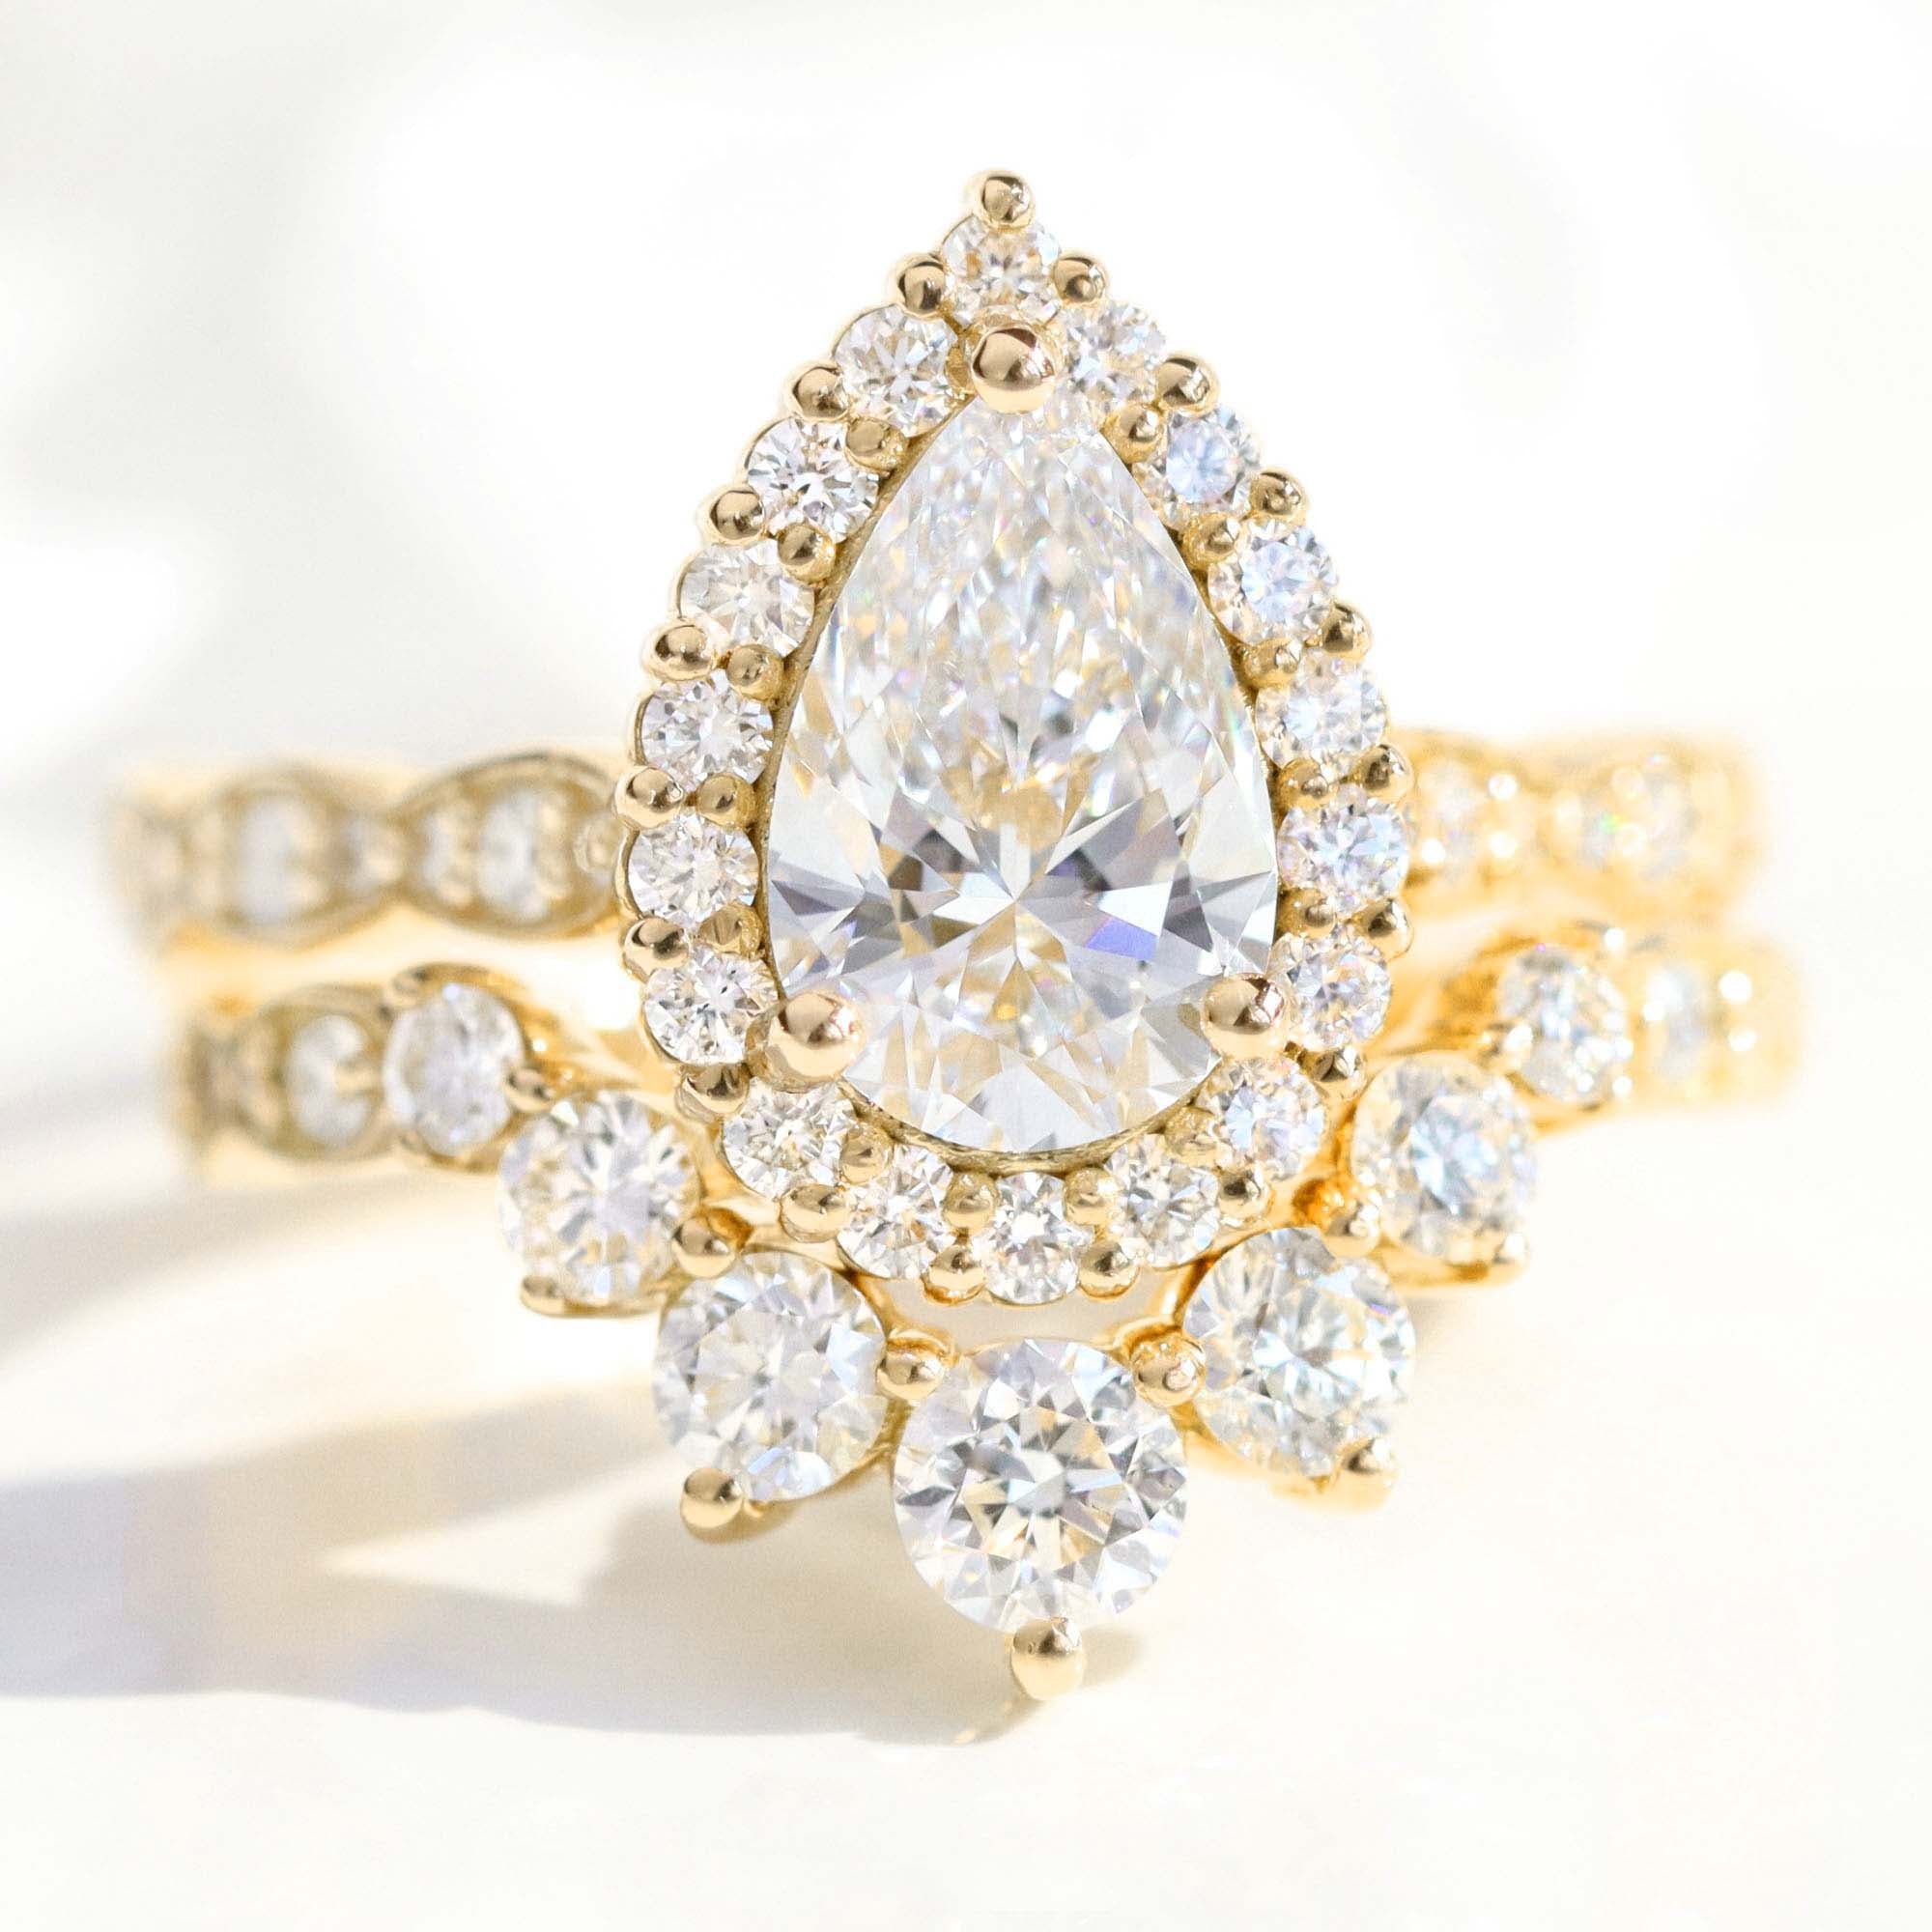 lab diamond ring stack yellow gold halo pear diamond engagement ring set La More Design Jewelry